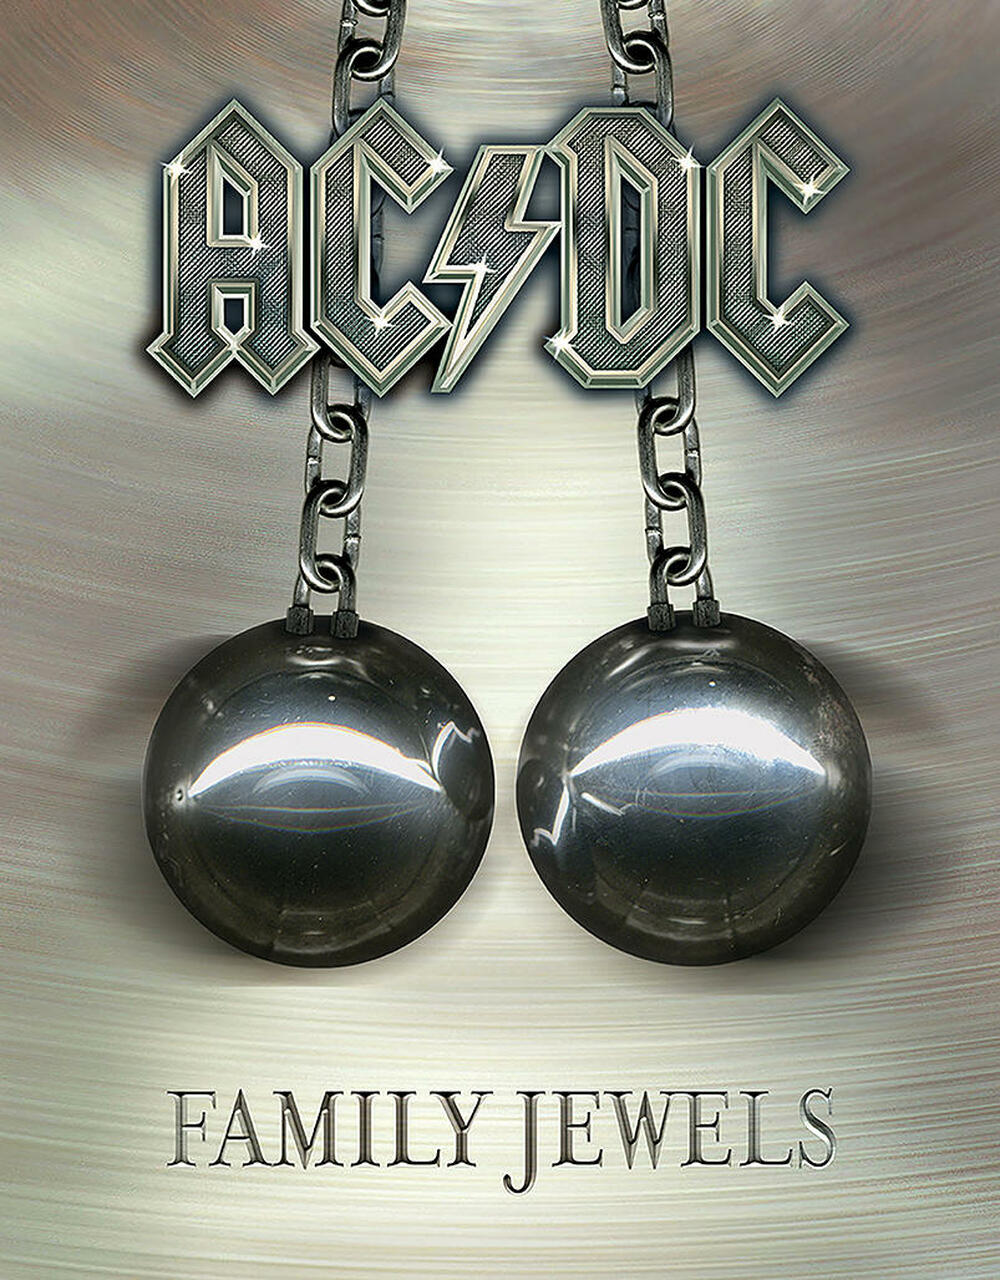 Desperate Enterprises AC/DC Family Jewels Metal Sign